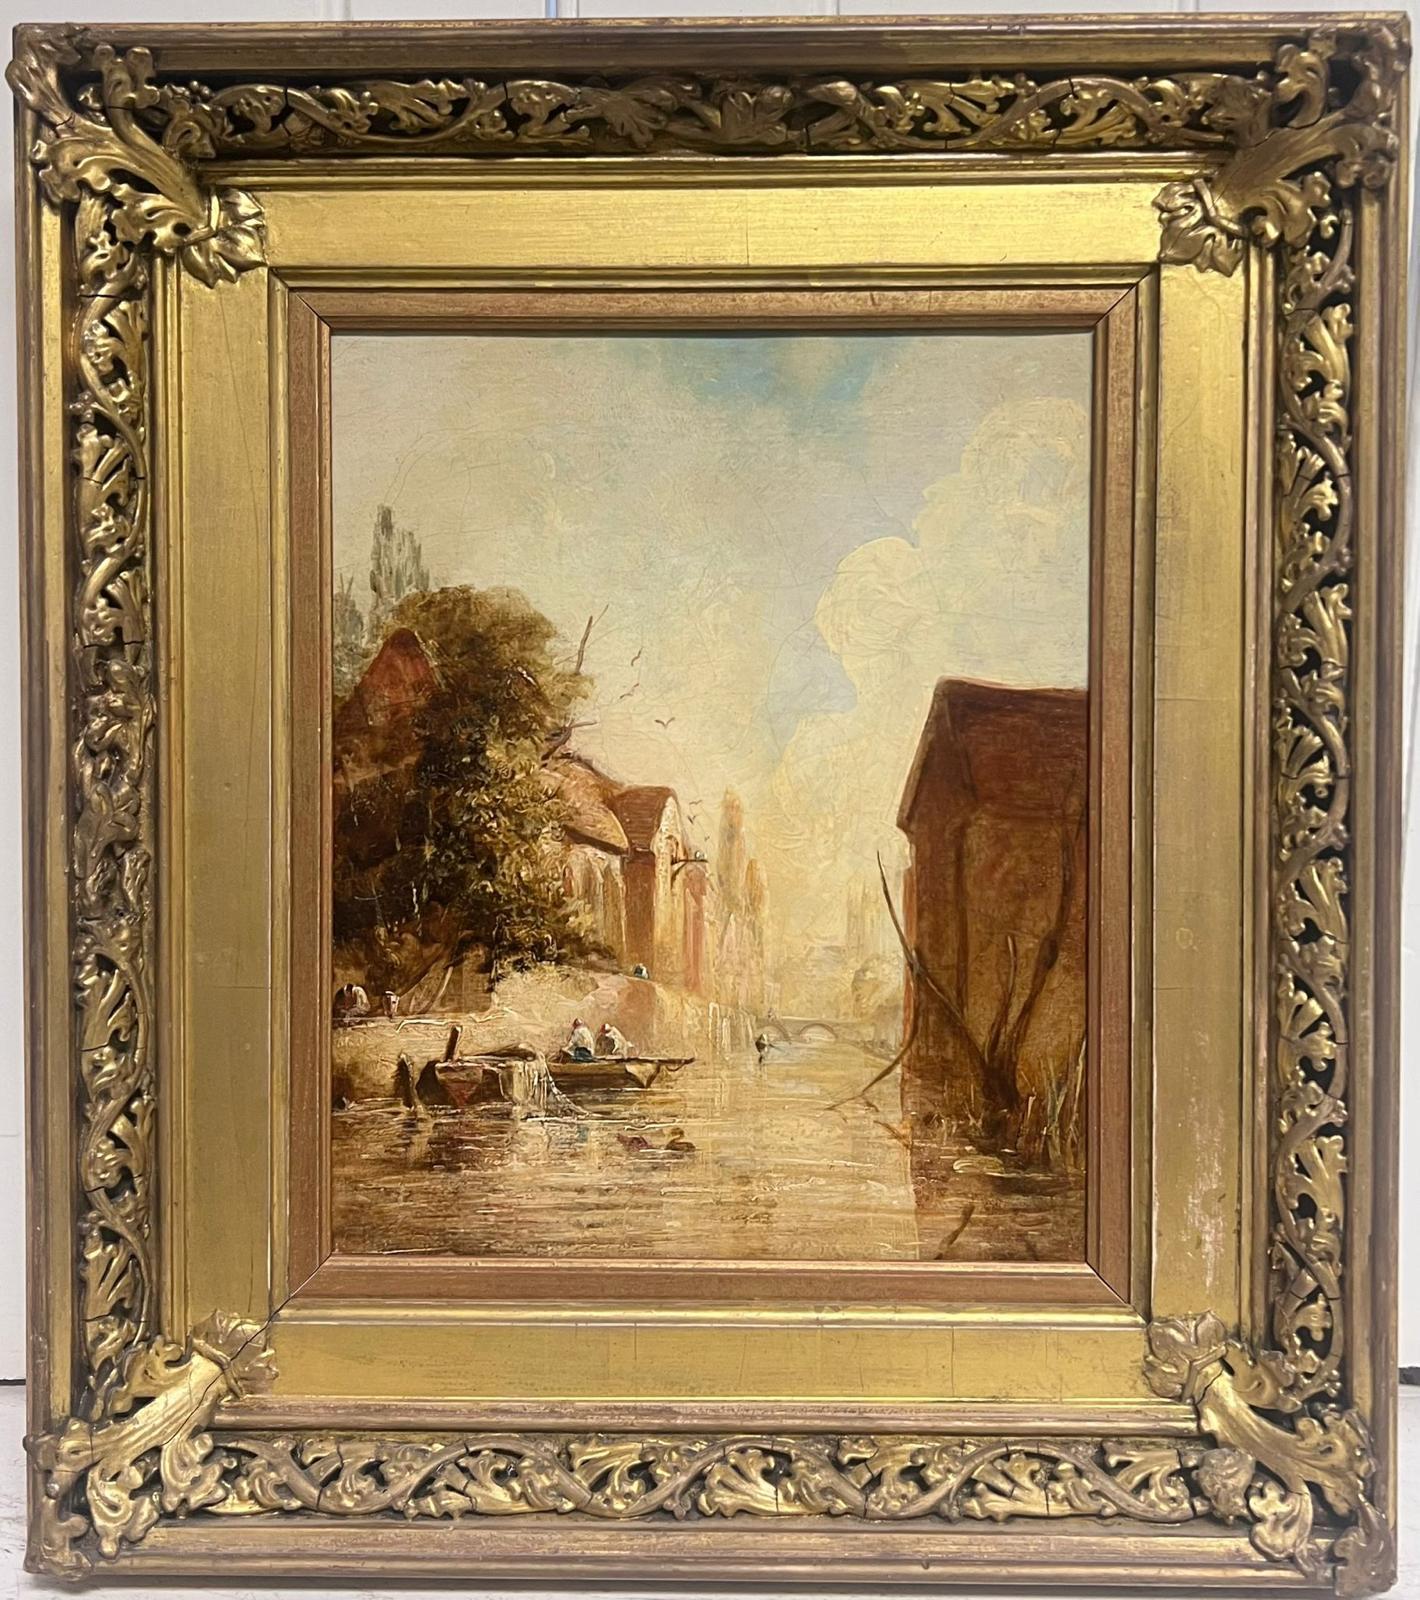 William Joseph Julius Caesar Bond (1833-1928) Landscape Painting - Victorian Oil Painting Figures in Boat City River Scene Backwater